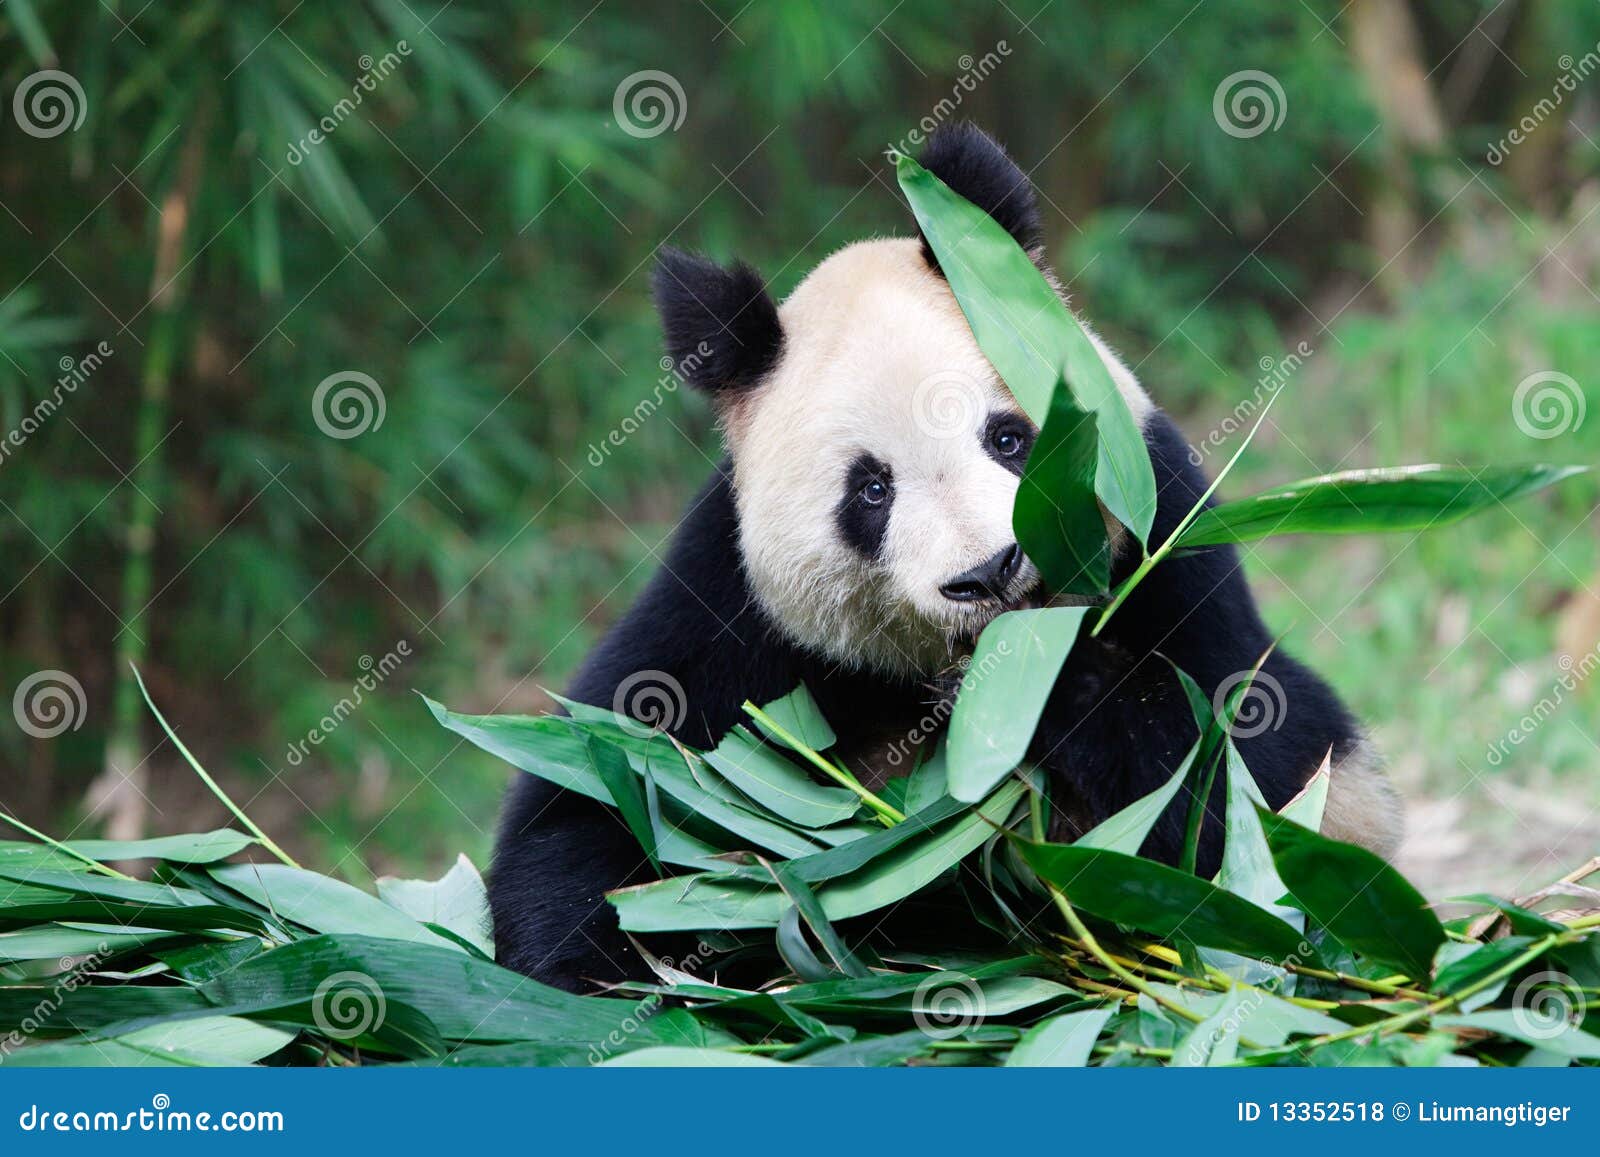 old giant panda